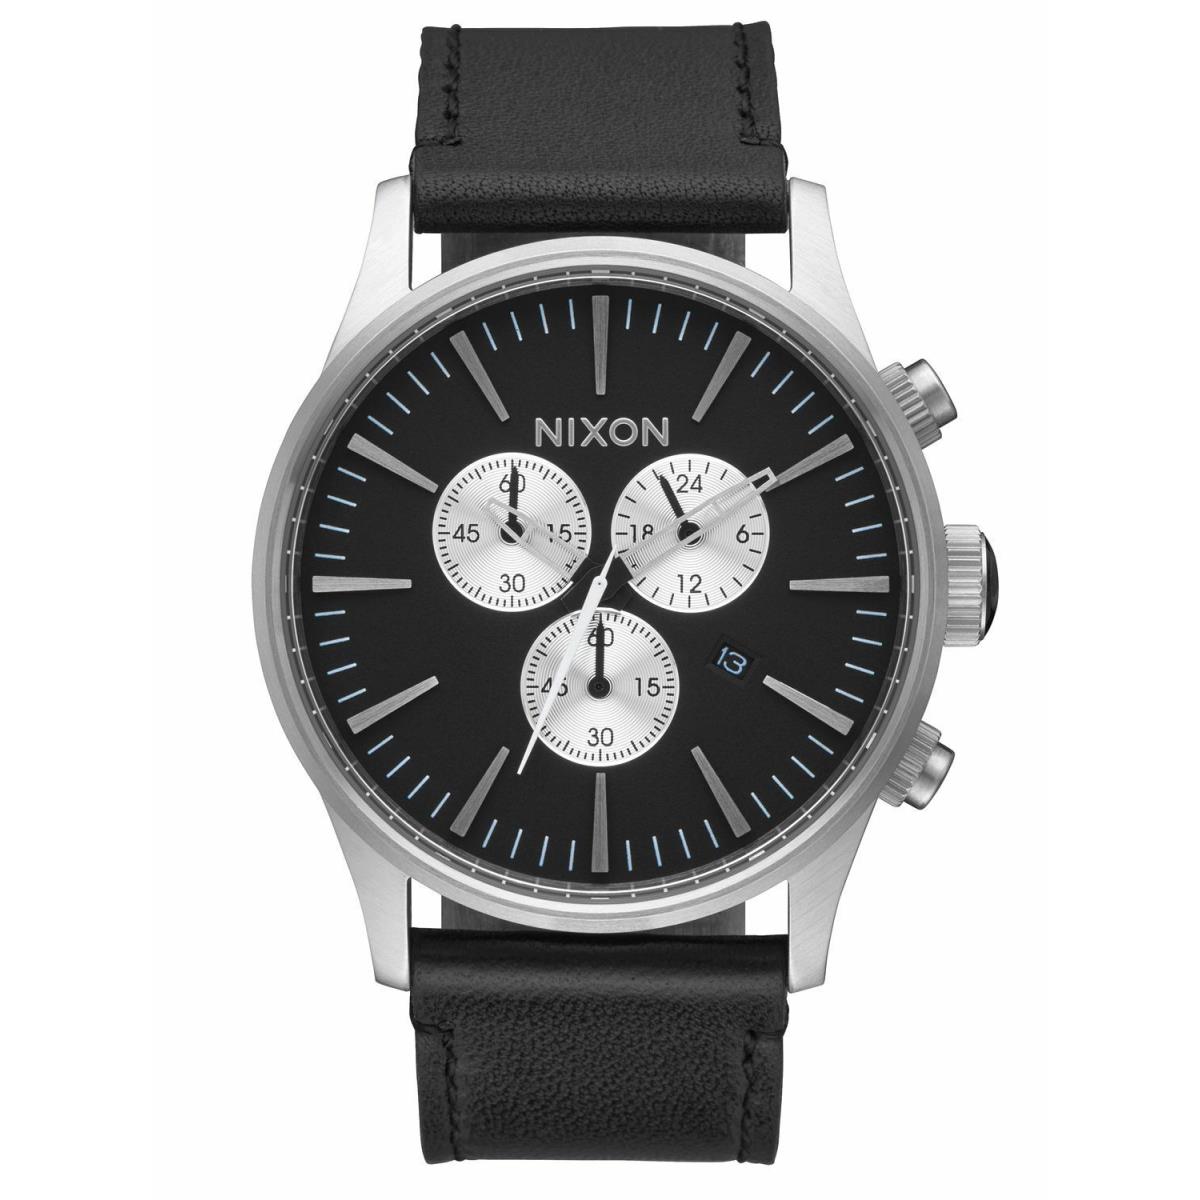 Nixon Sentry Chrono Black Leather Watch A405000 / A405 000 / A405-000